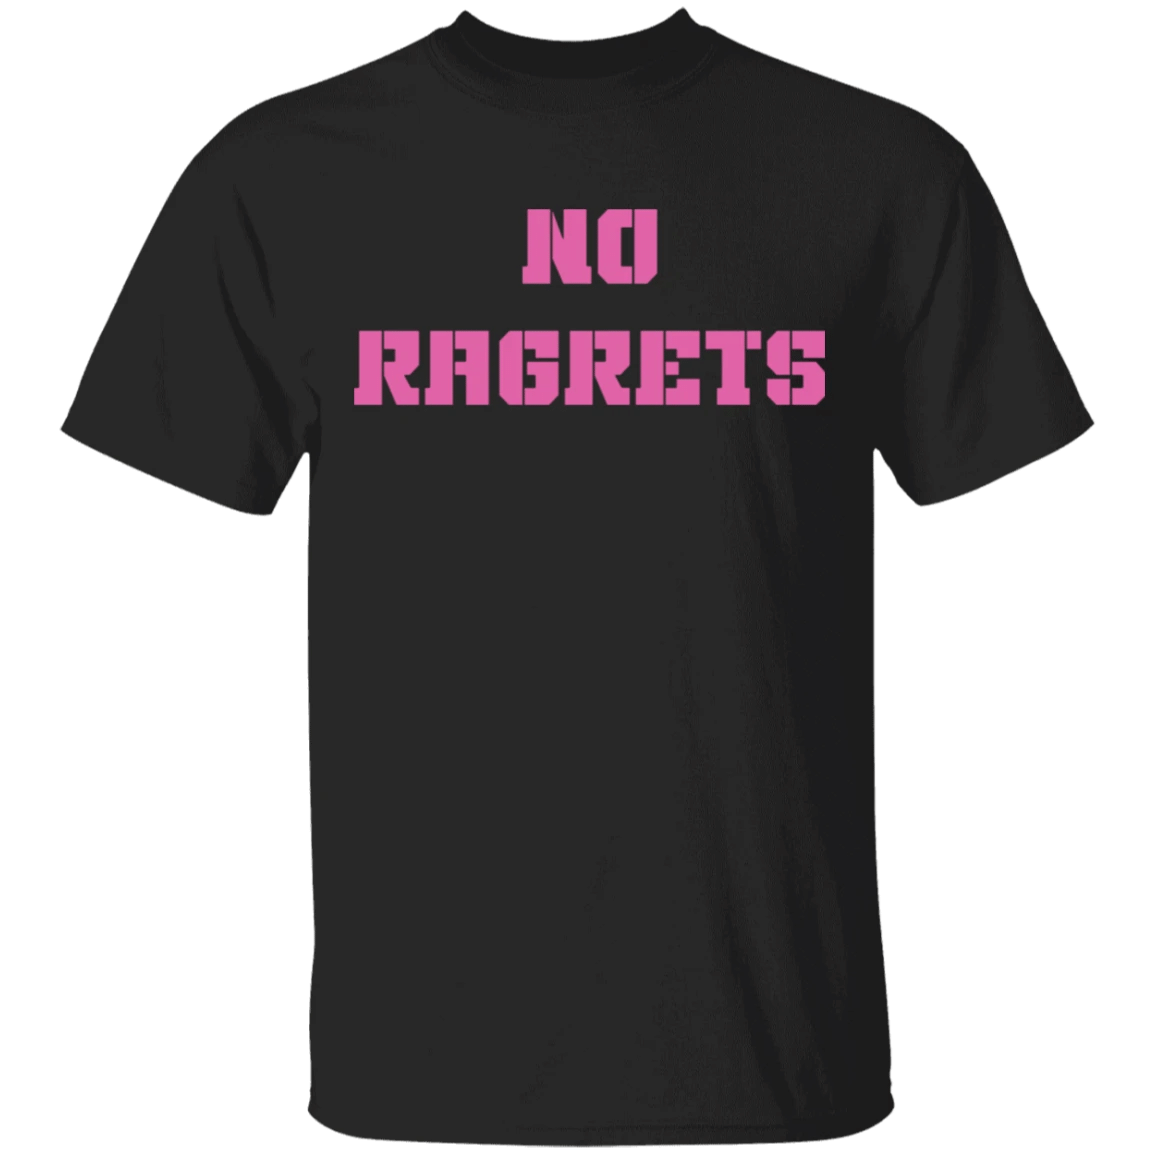 No Ragrets T-Shirt Humor Misspelling No Regrets Funny Gag Gift For Best Friend